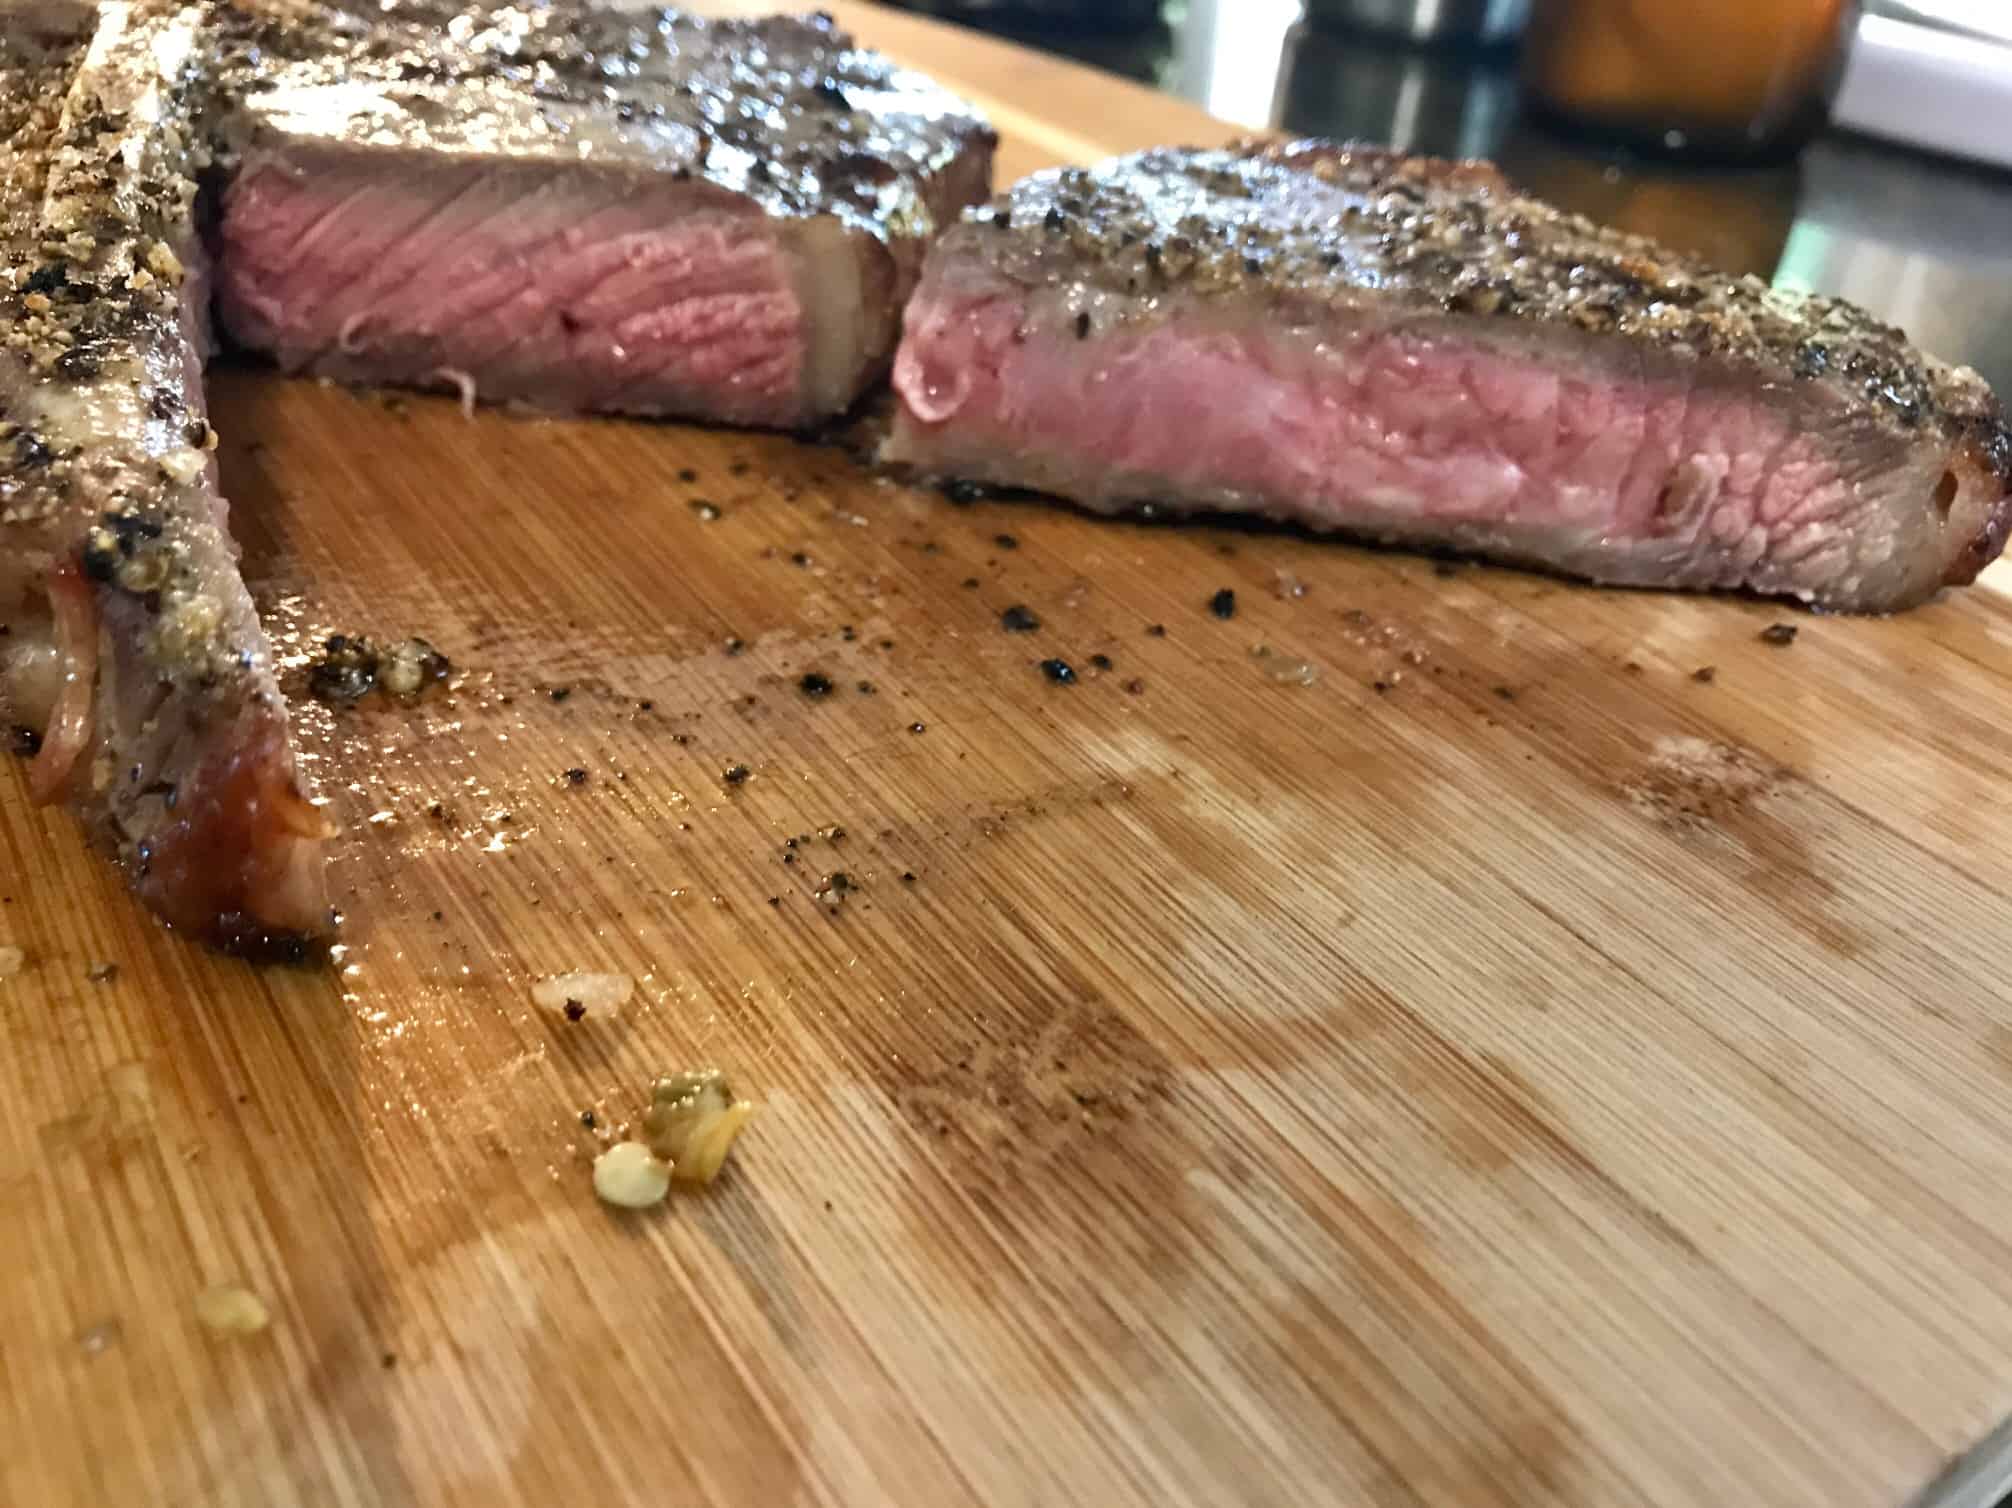 Reverse Sear Steak slice from side to show pink inside